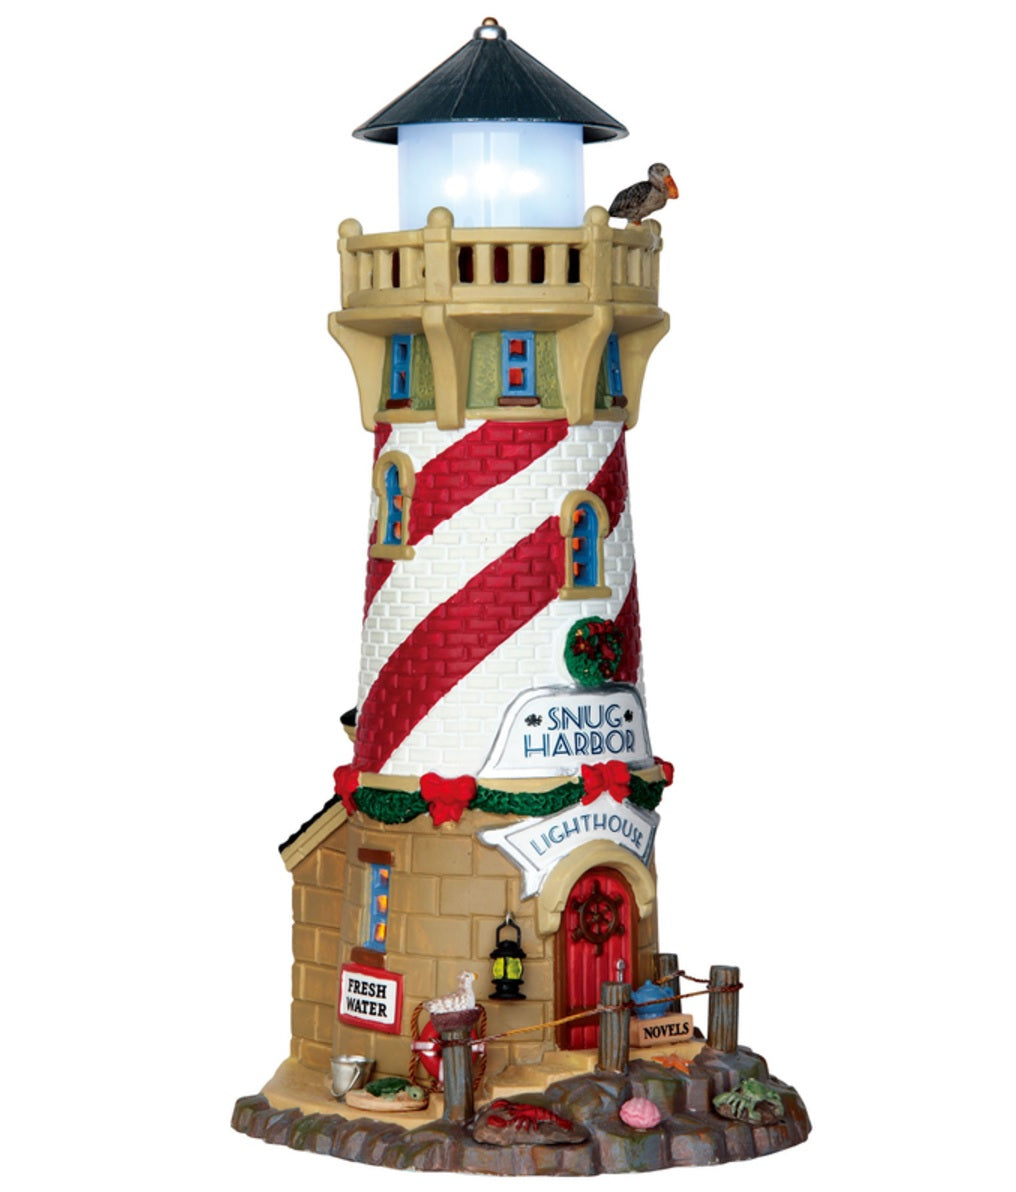 Lemax 65163 Snug Harbor Lighthouse Christmas Village Building, Multicolored